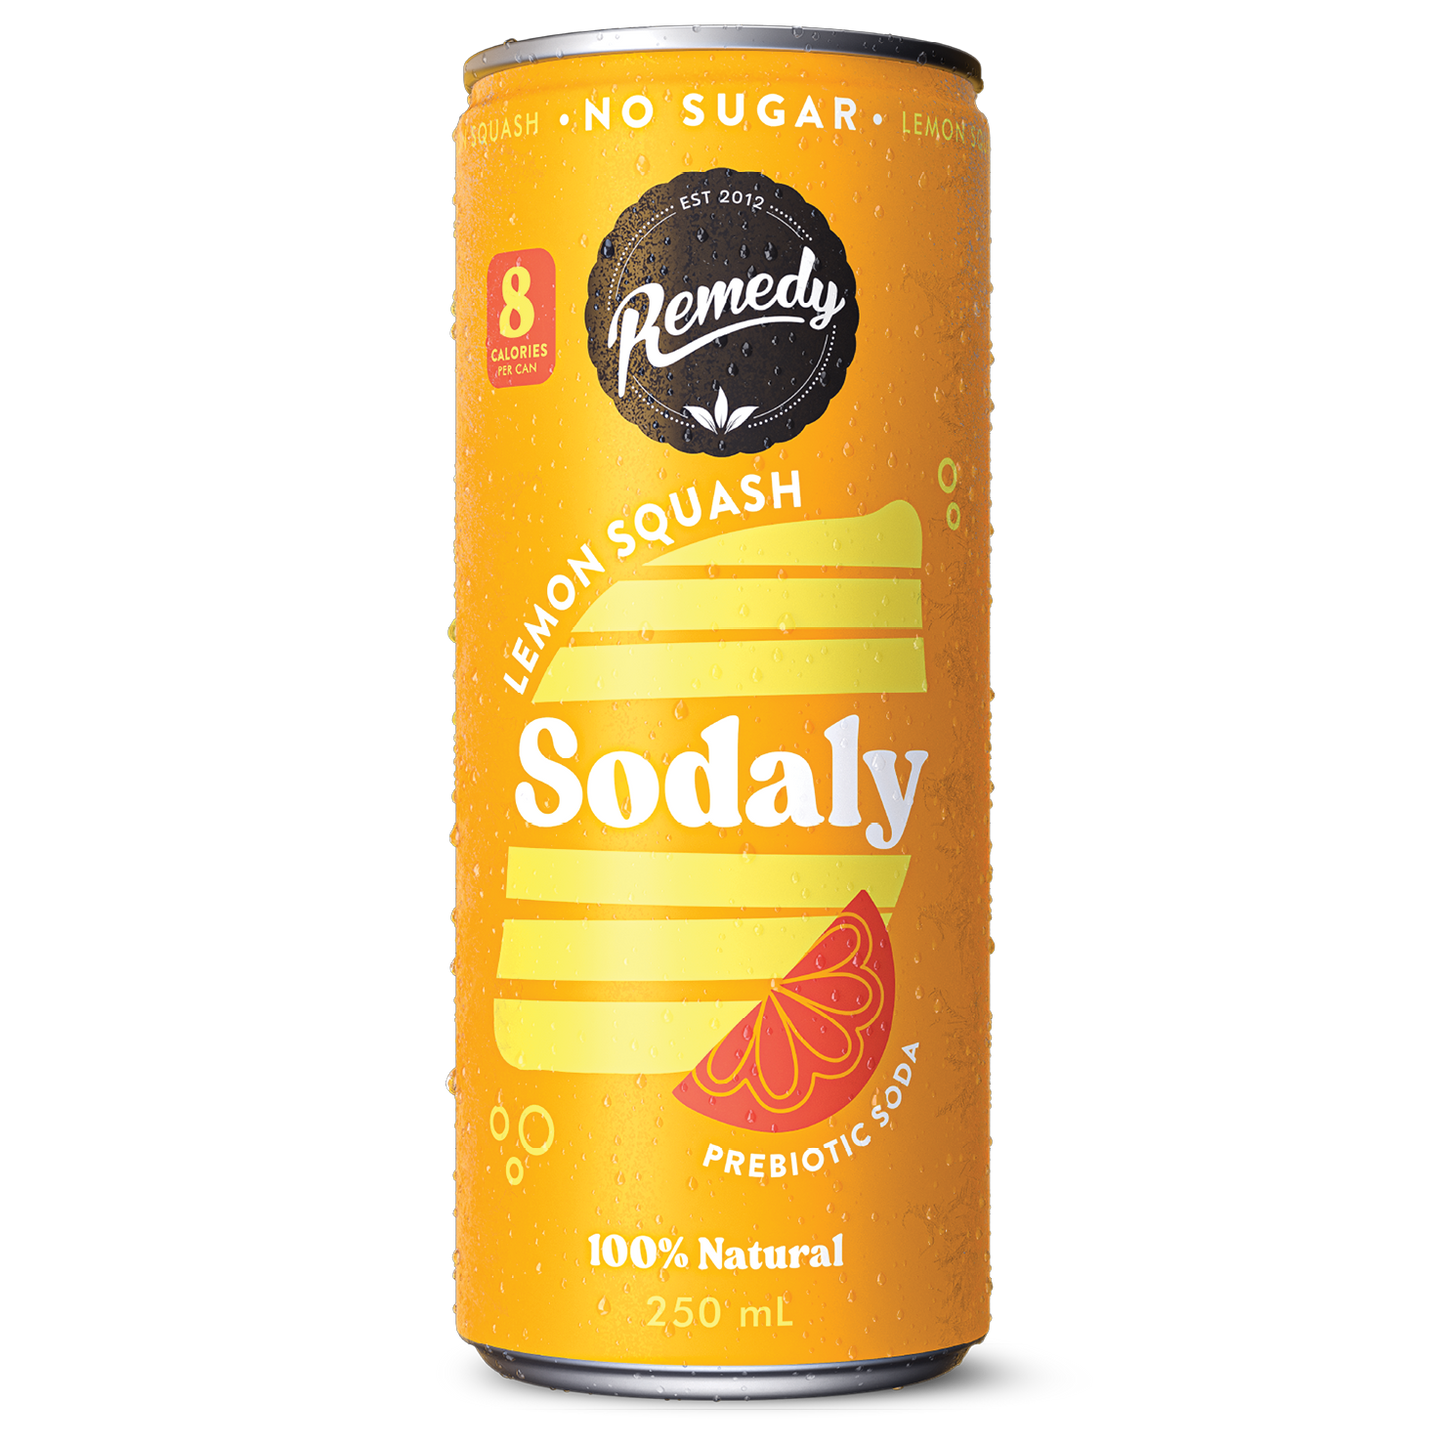 Remedy Sodaly Lemon Squash